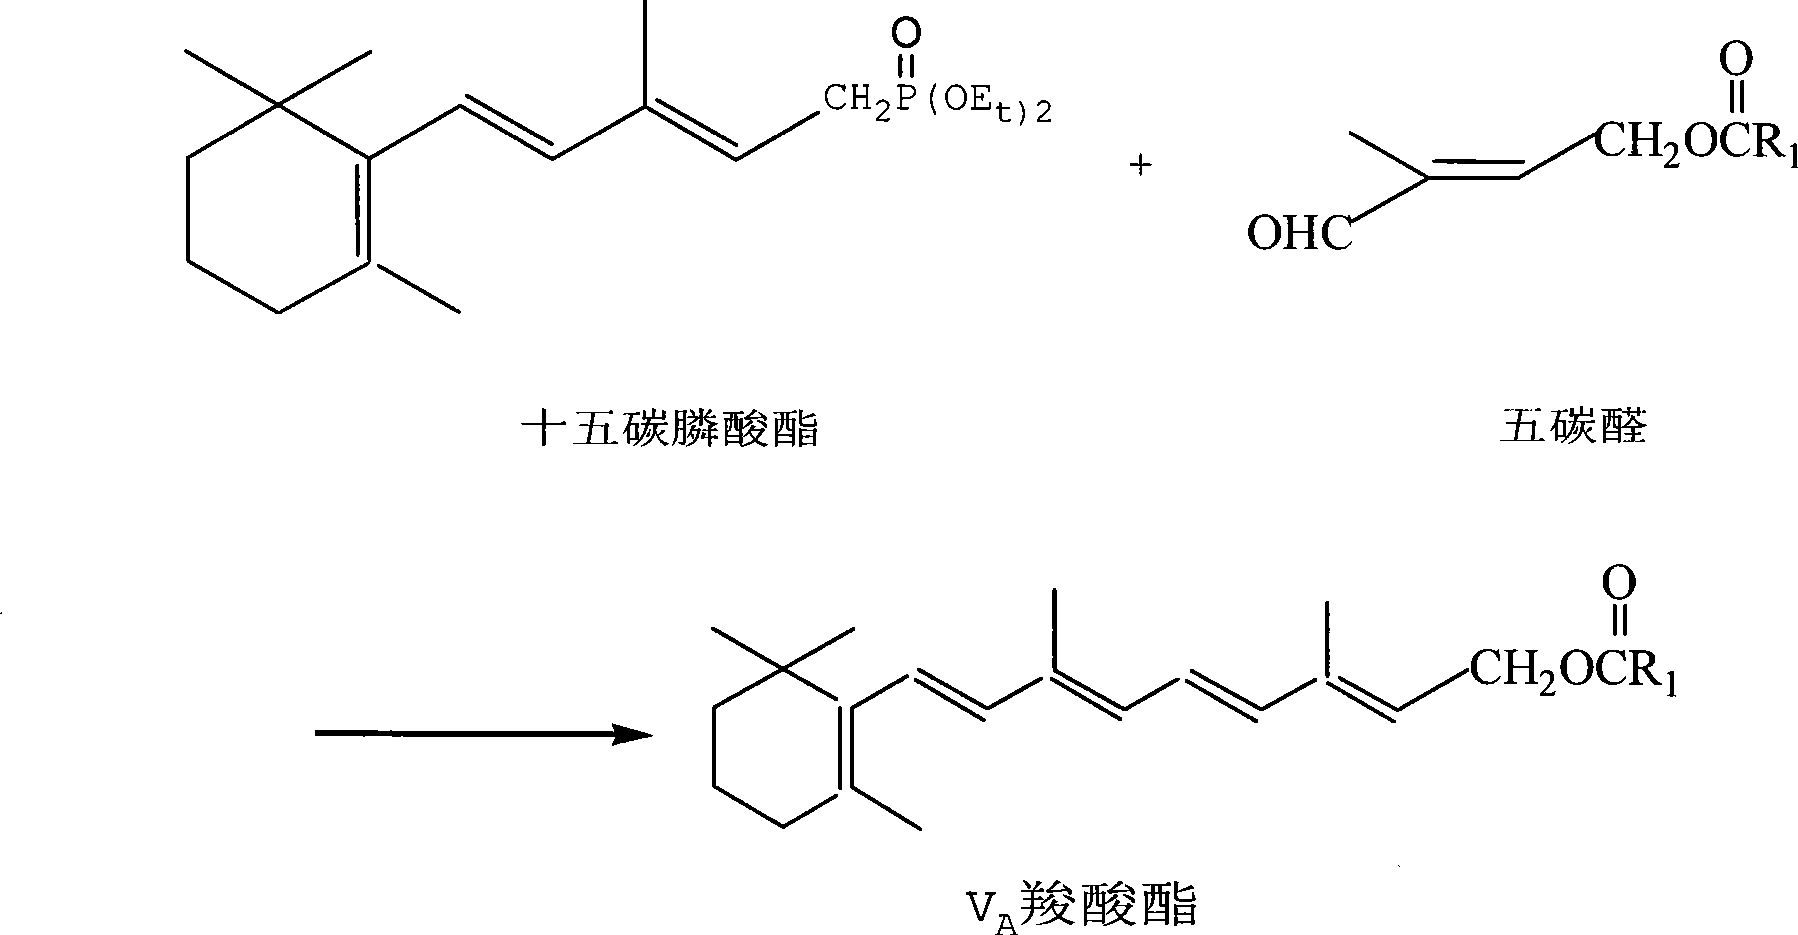 Method for preparing 2,4-di-double-bond 15-carbon phosphonate